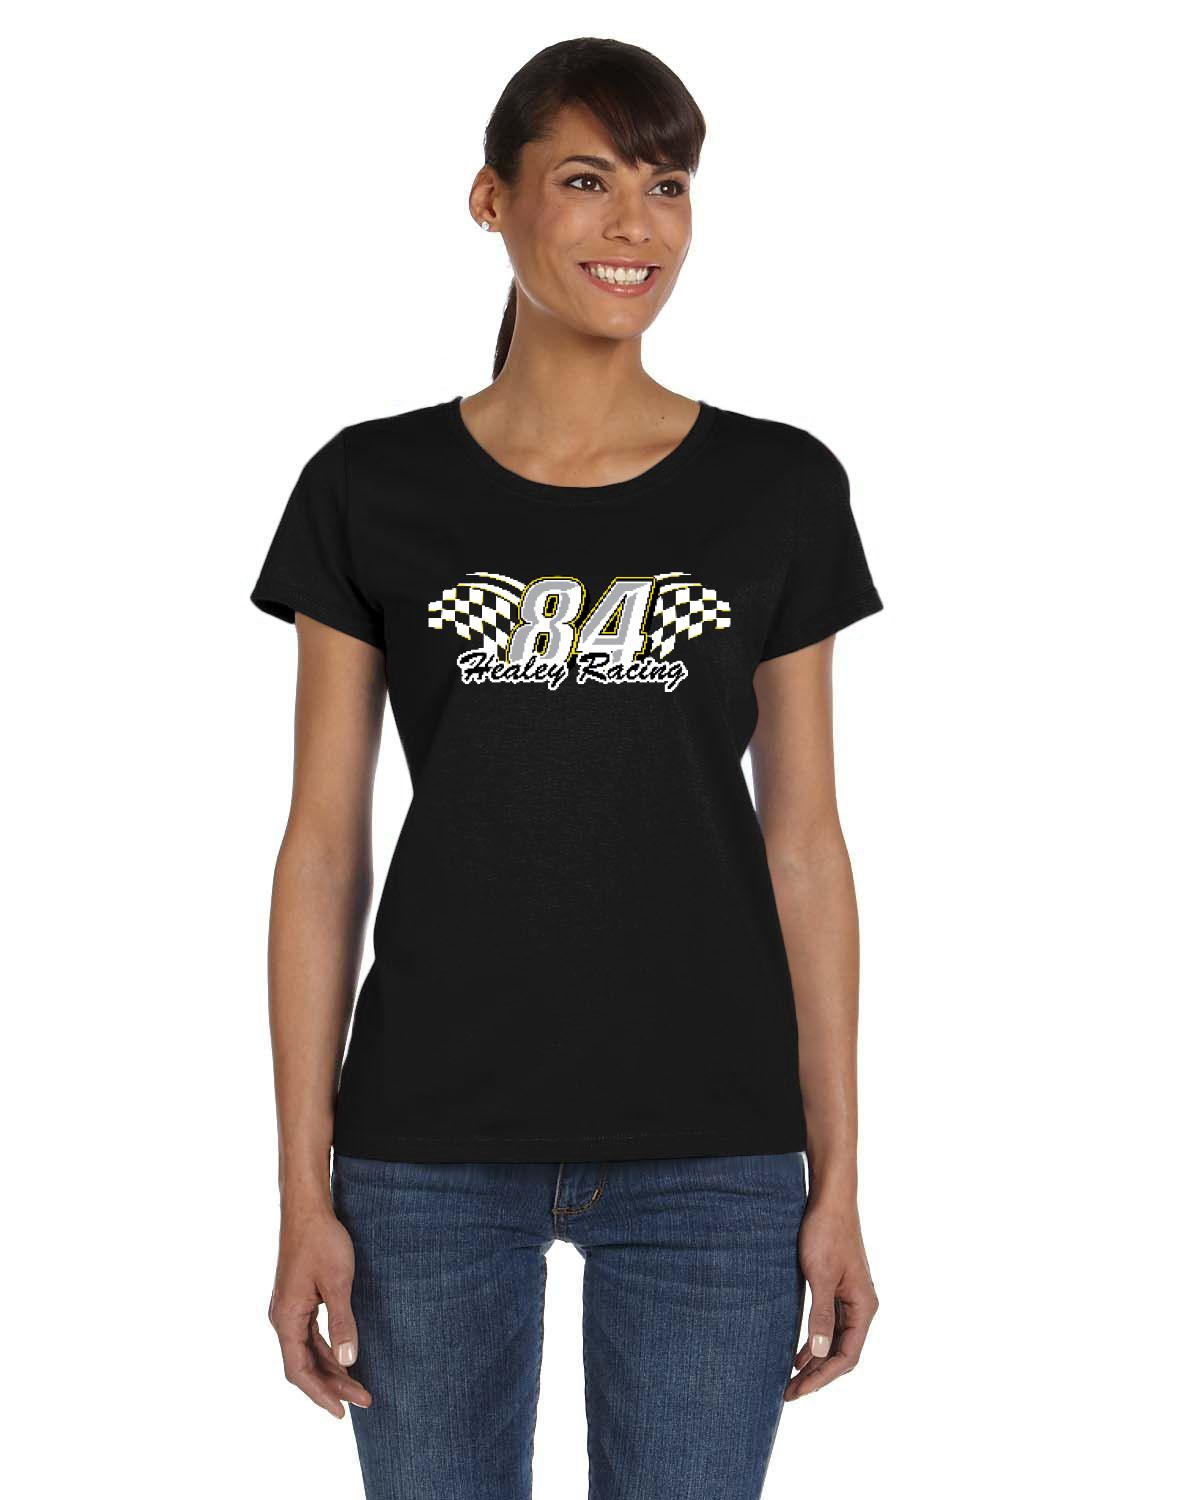 Healy Racing Ladies T-Shirt